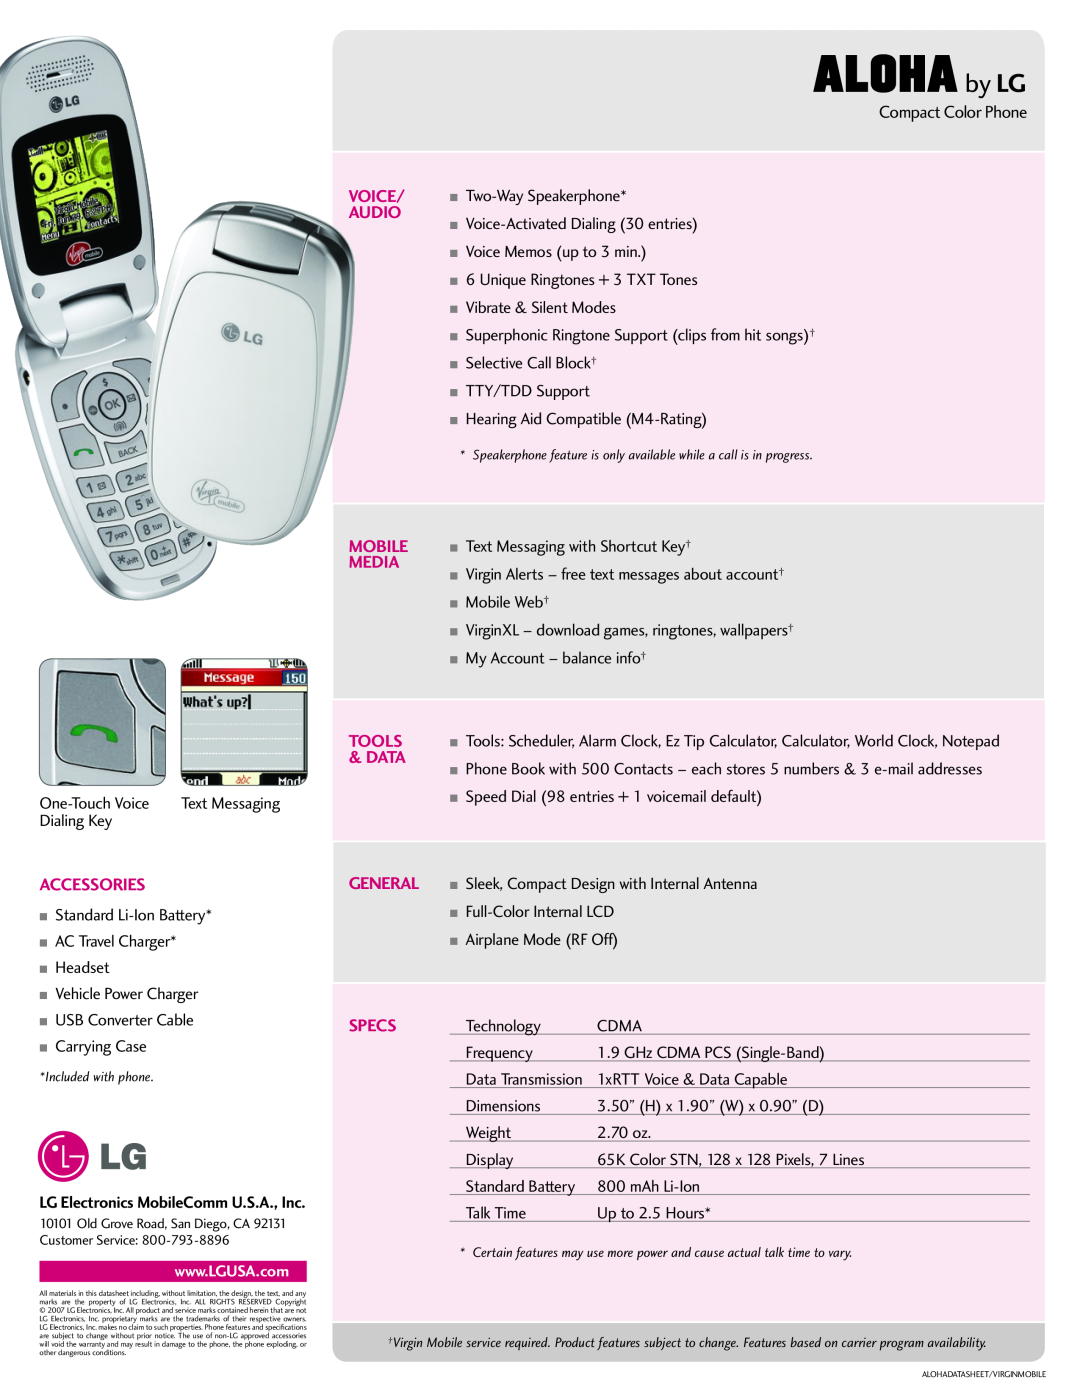 LG Electronics ALOHA manual Accessories, Voice, Audio, Mobile, Media, Tools, Data, General, Specs 